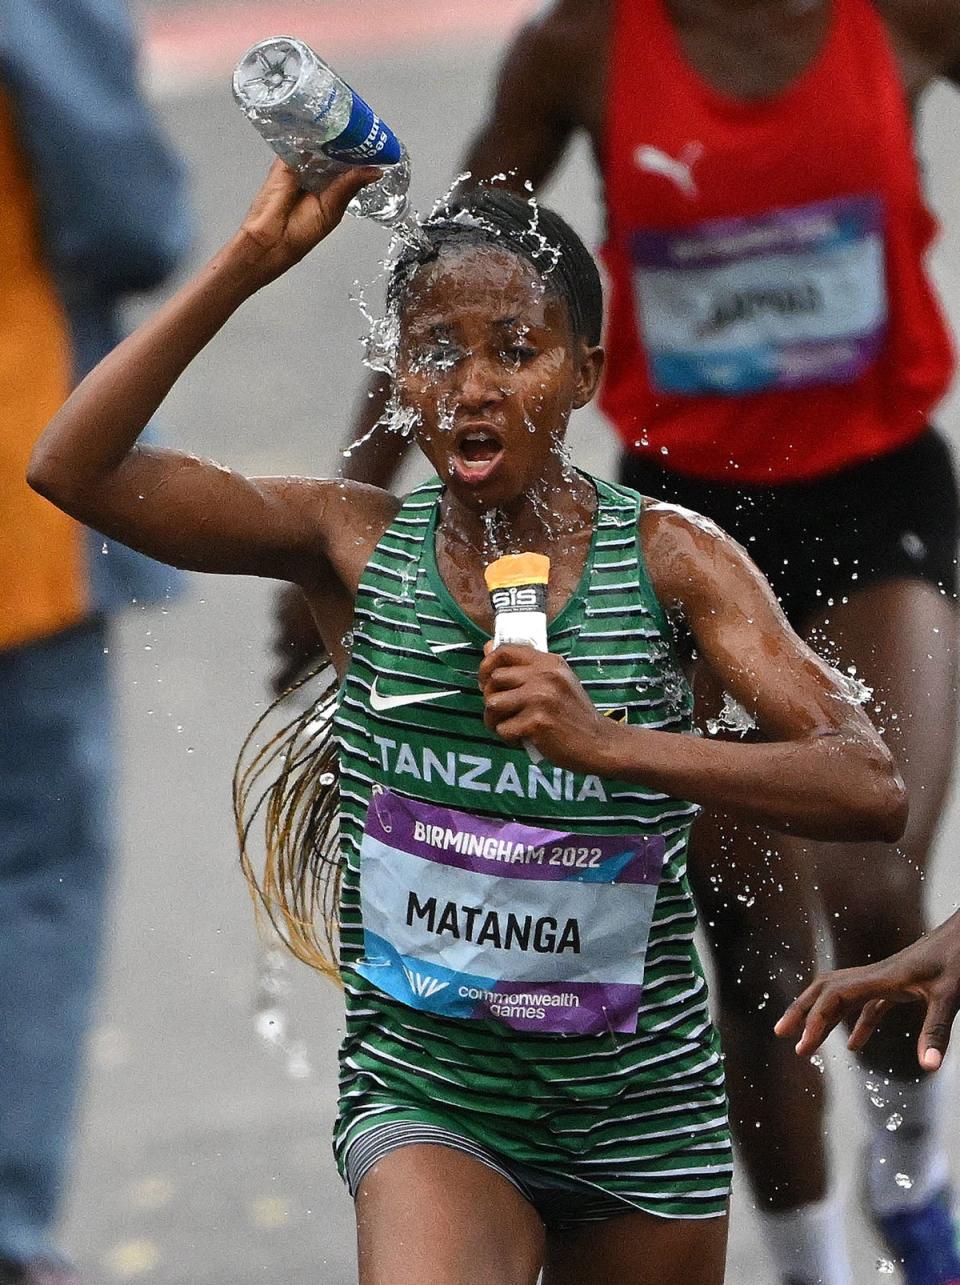 Tanzania’s Failuna Matanga douses herself in water during the Commonwealth Games Marathon (AFP via Getty)